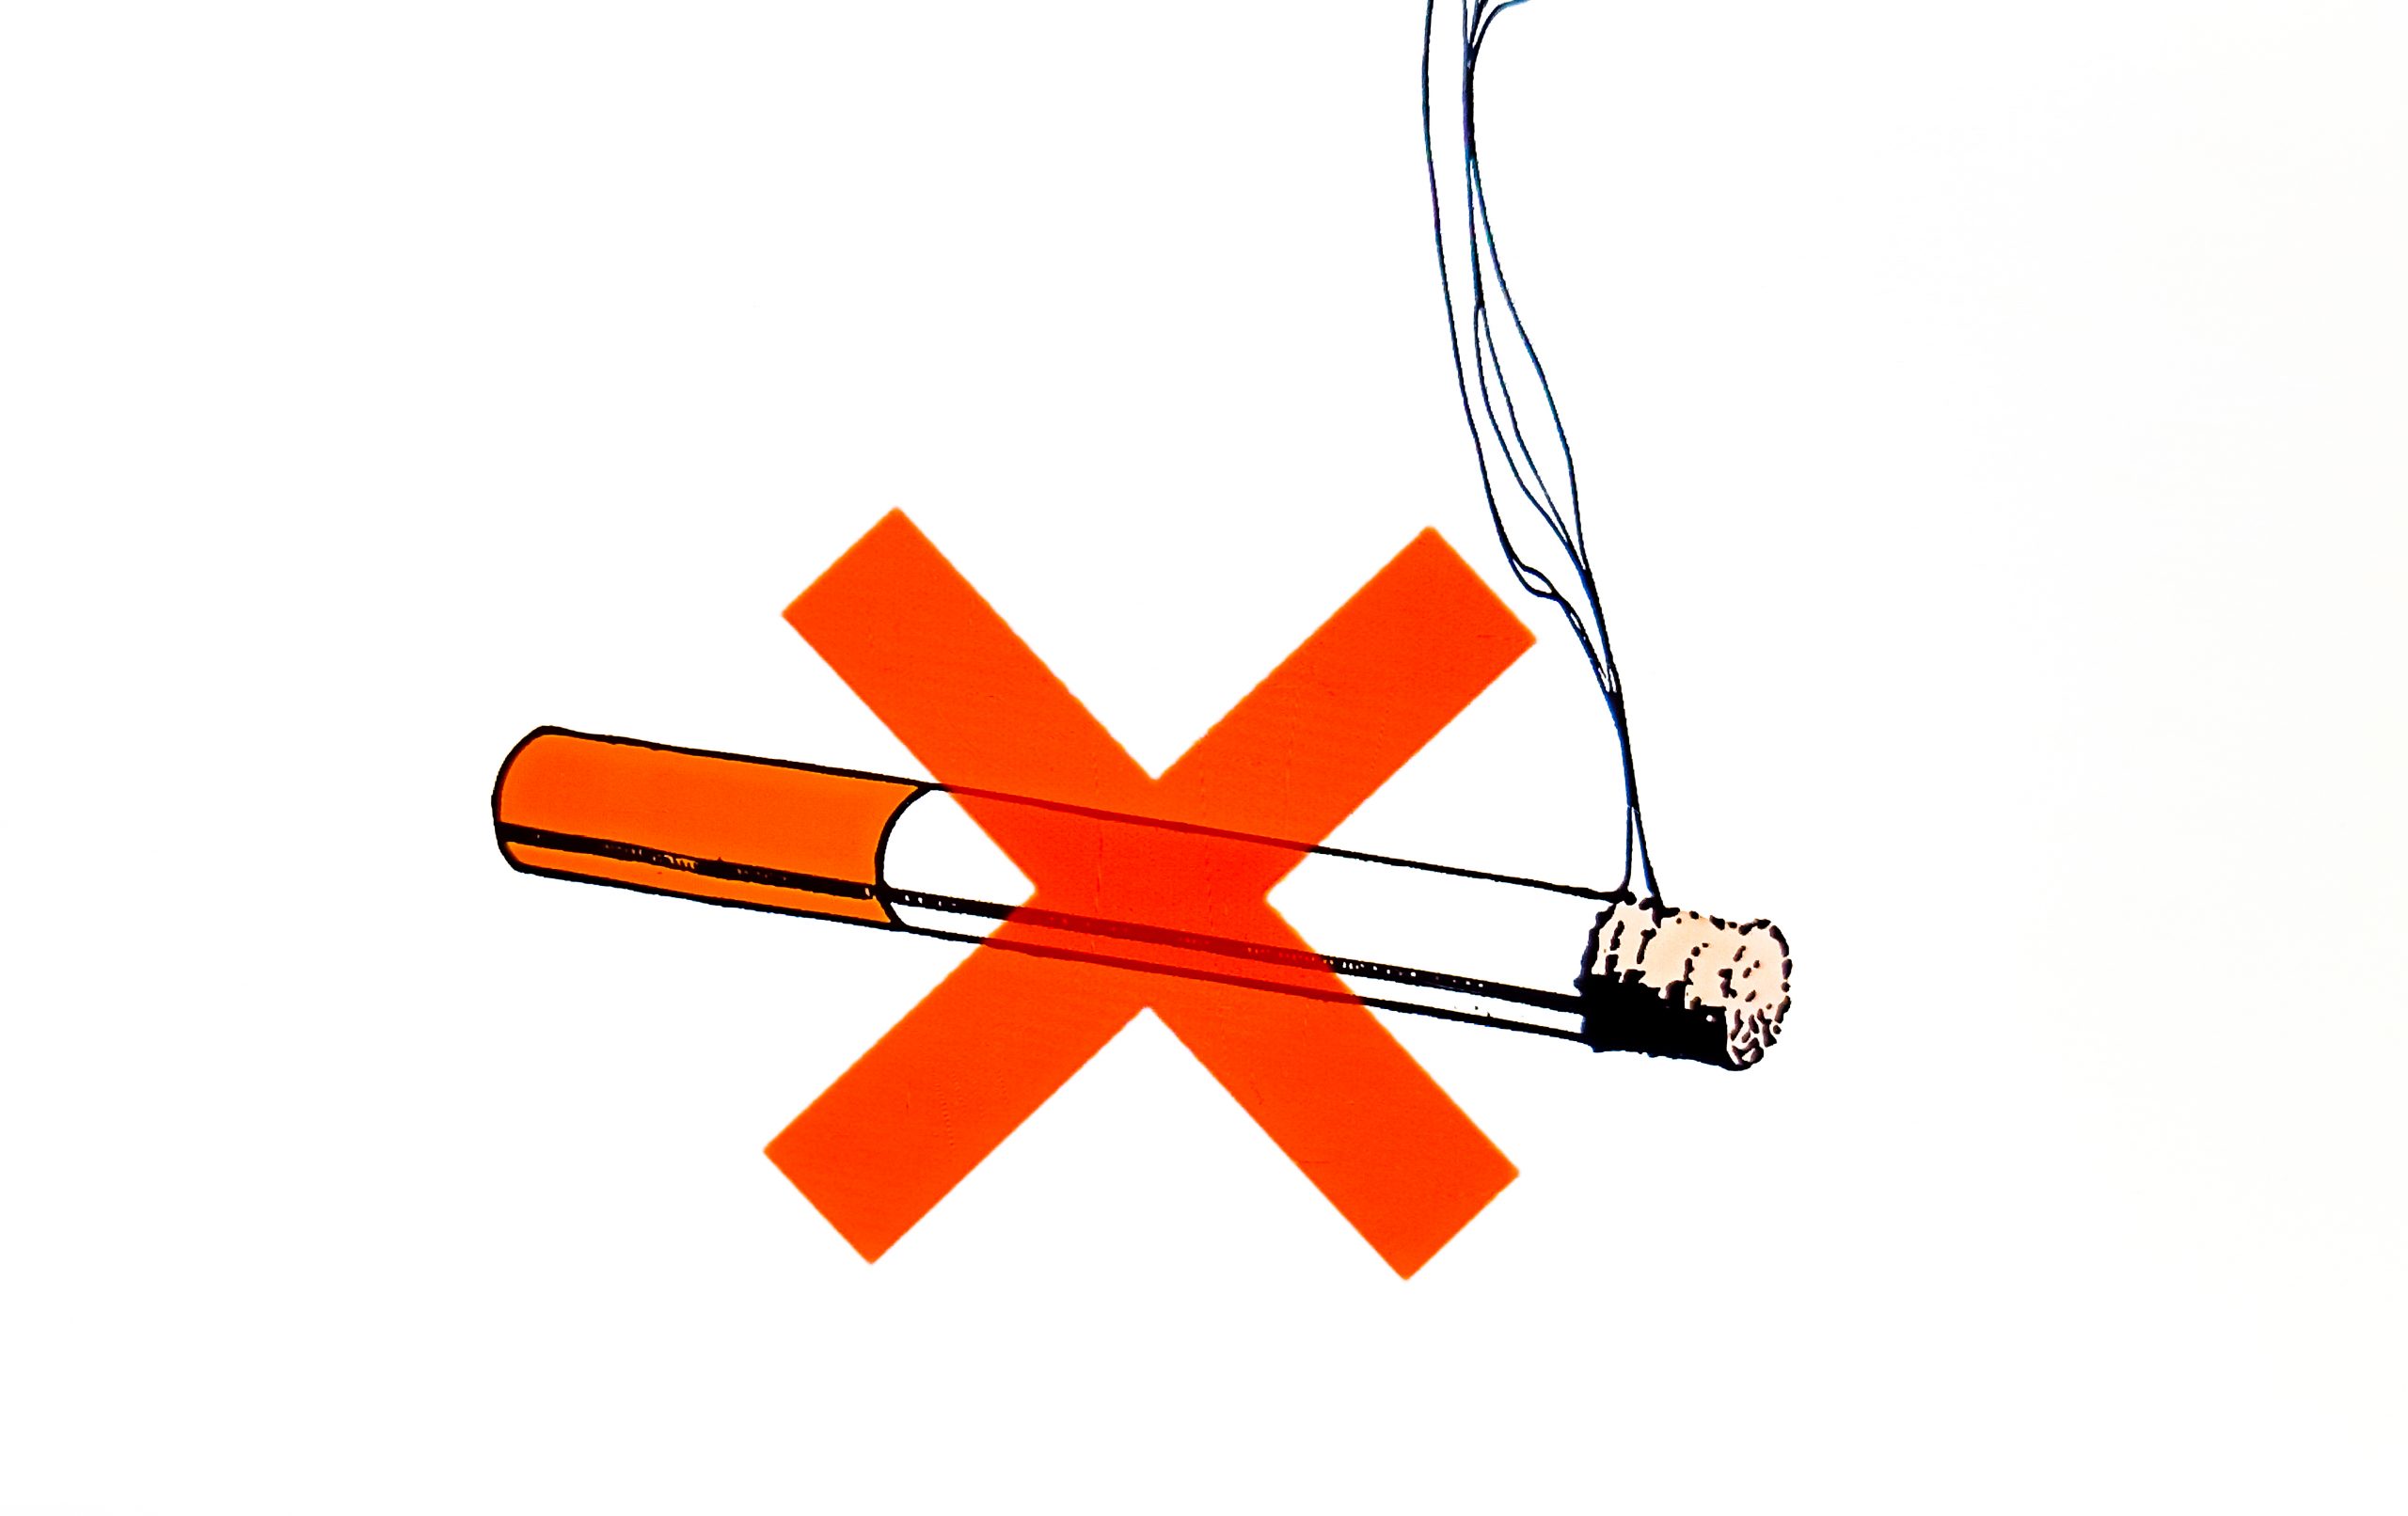 No smoking illustration